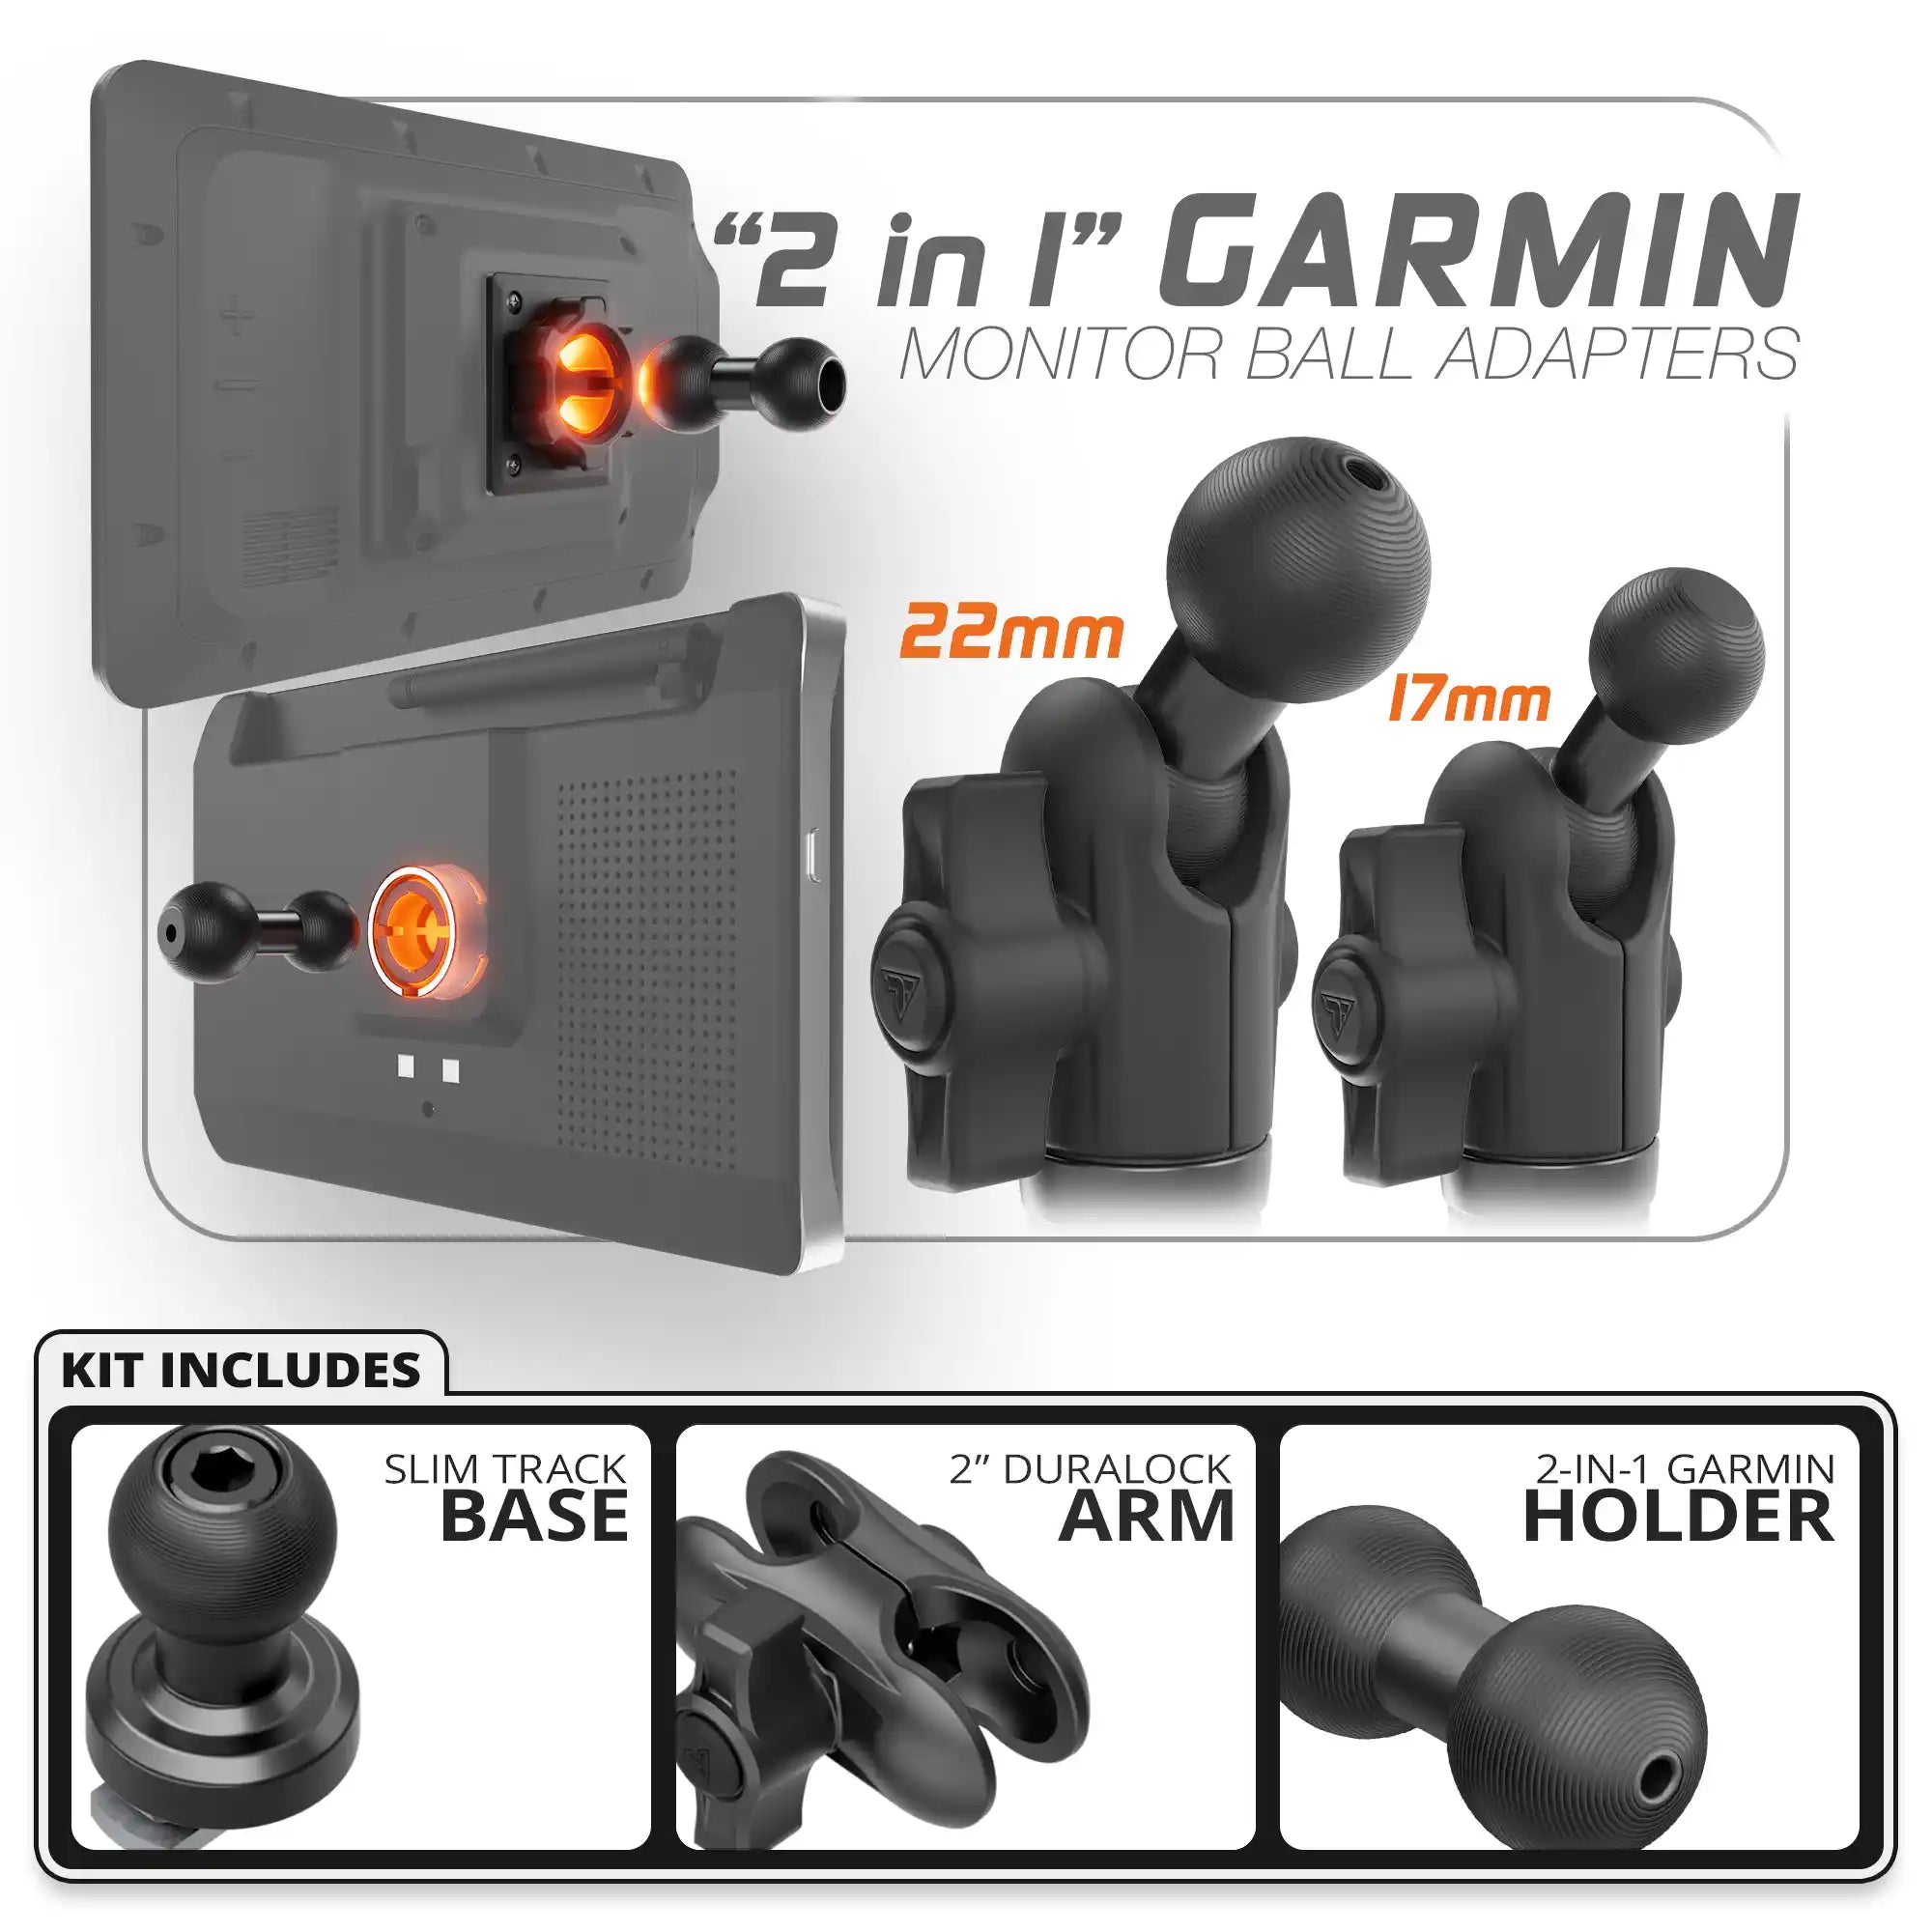 Garmin | Slim Track Base | 2" DuraLock Arm